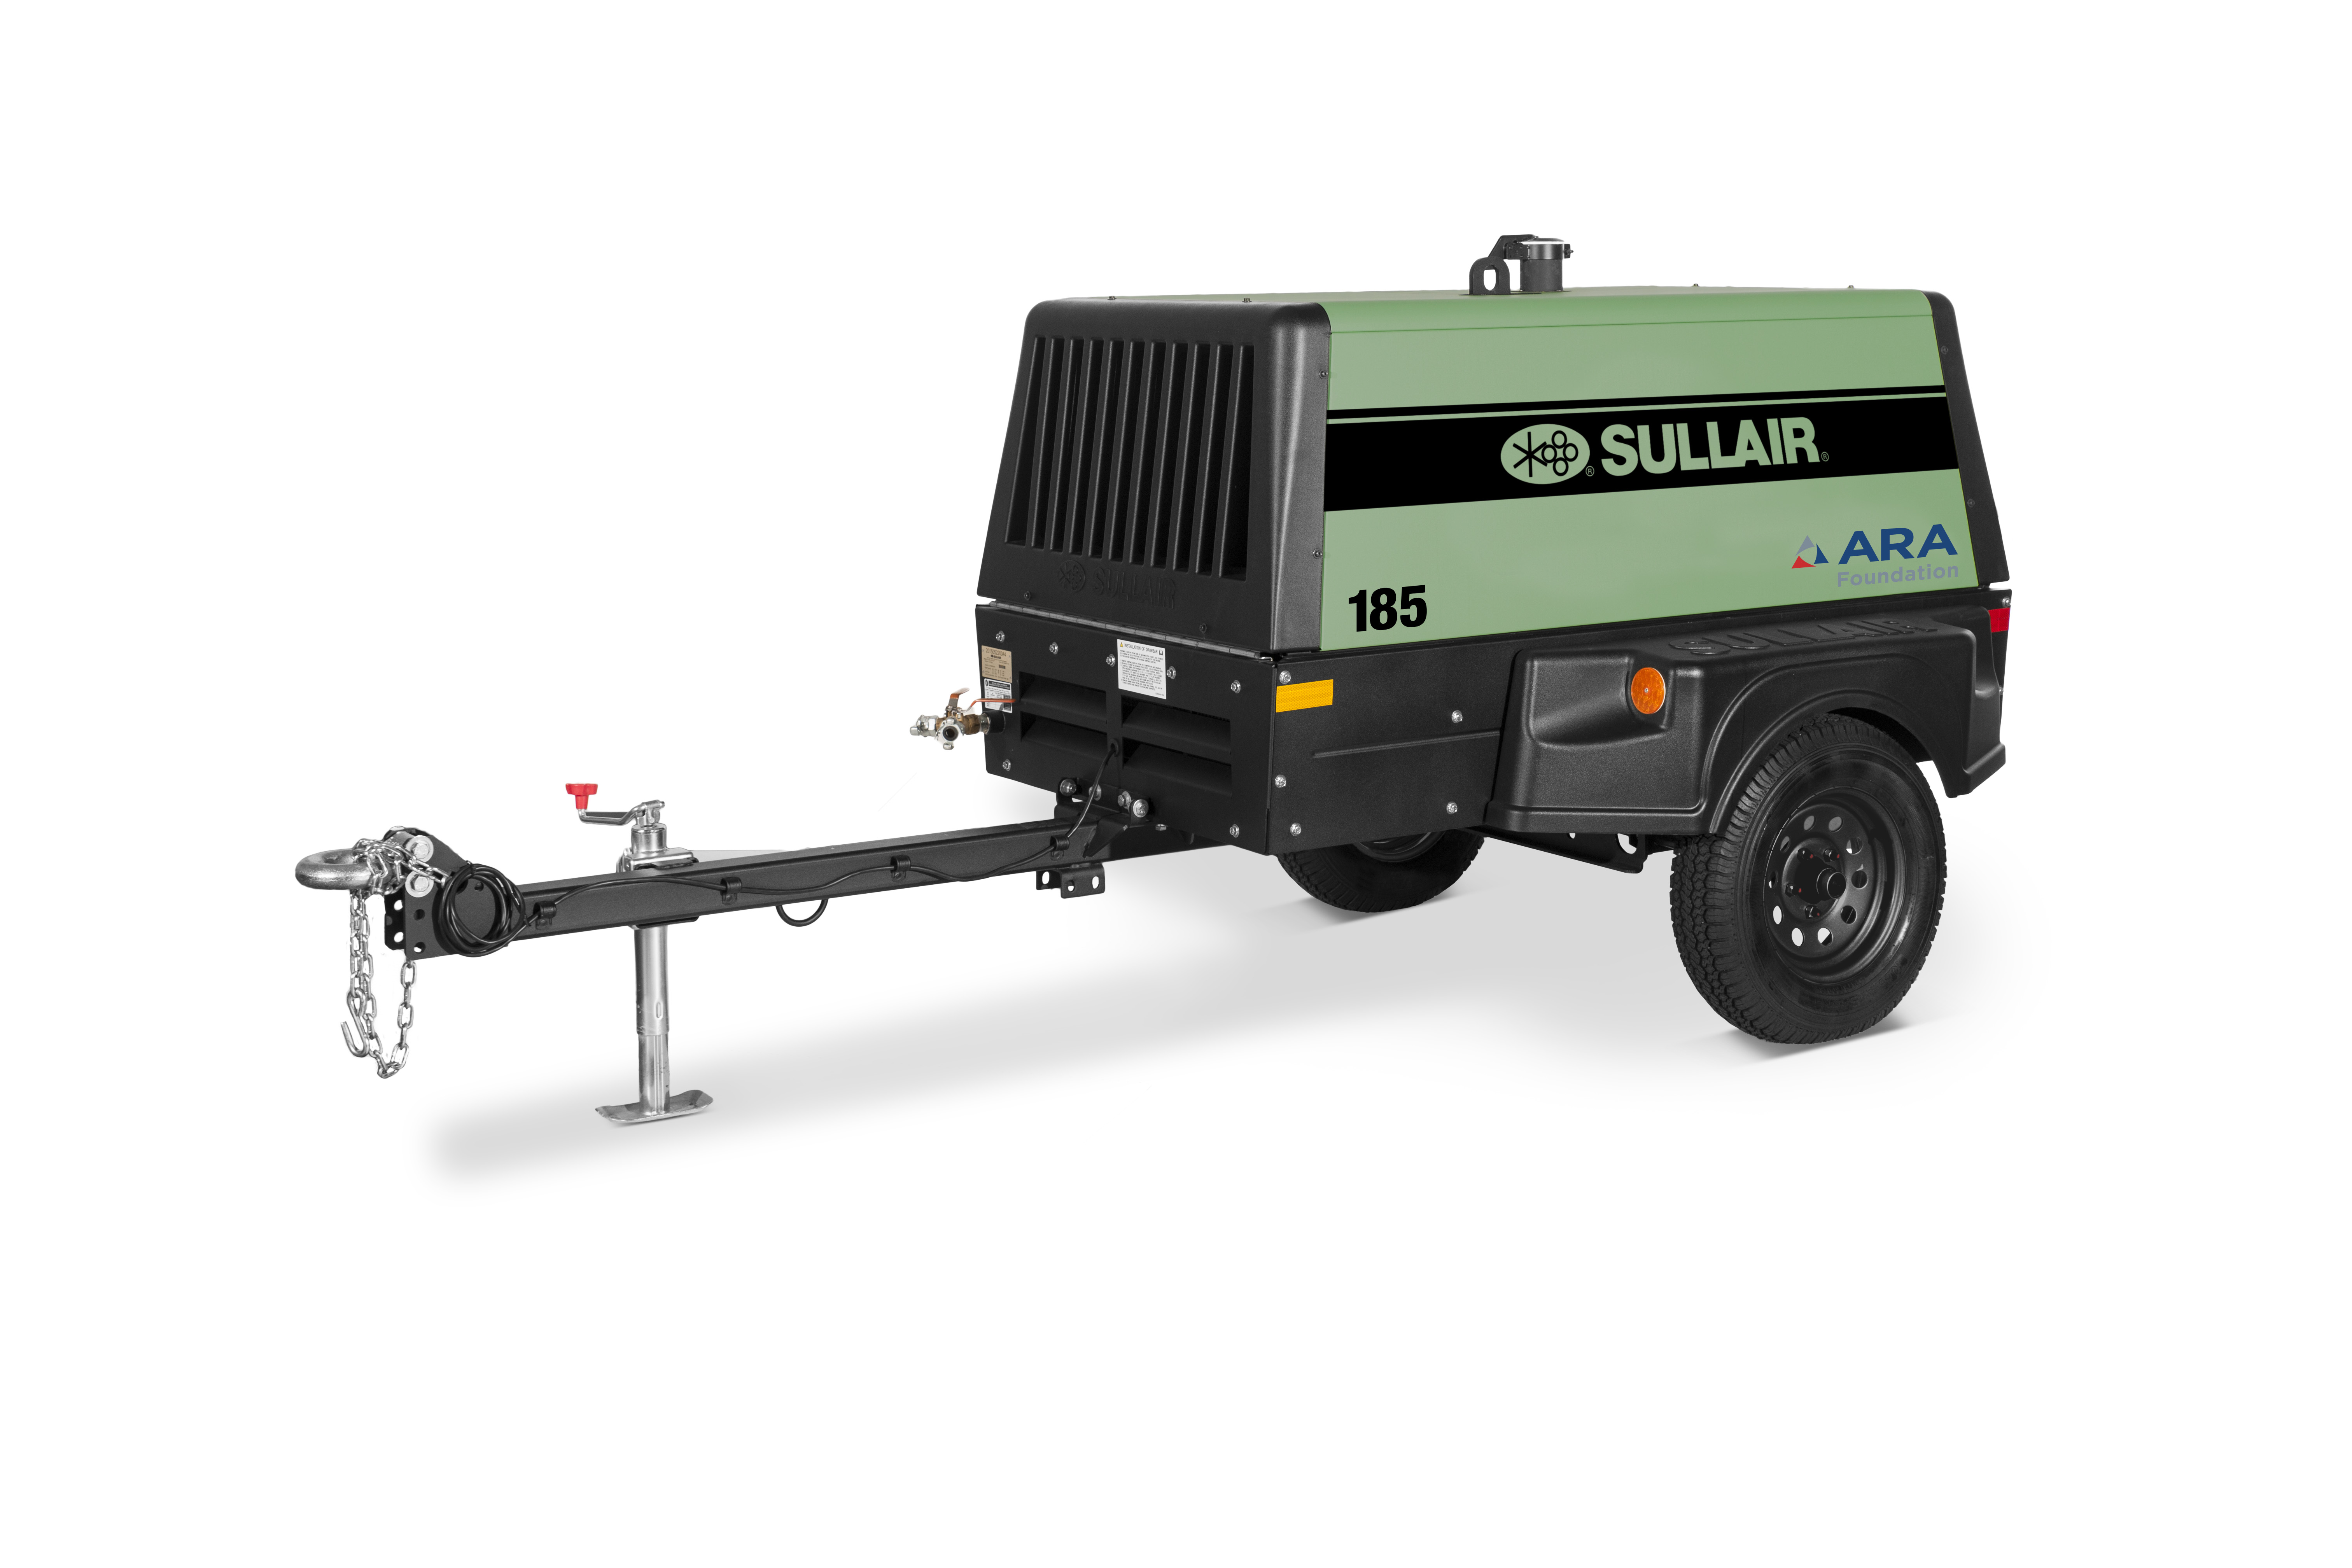 Sullair 185 Tier 4 Final Portable Diesel Air Compressor with ARA Decal